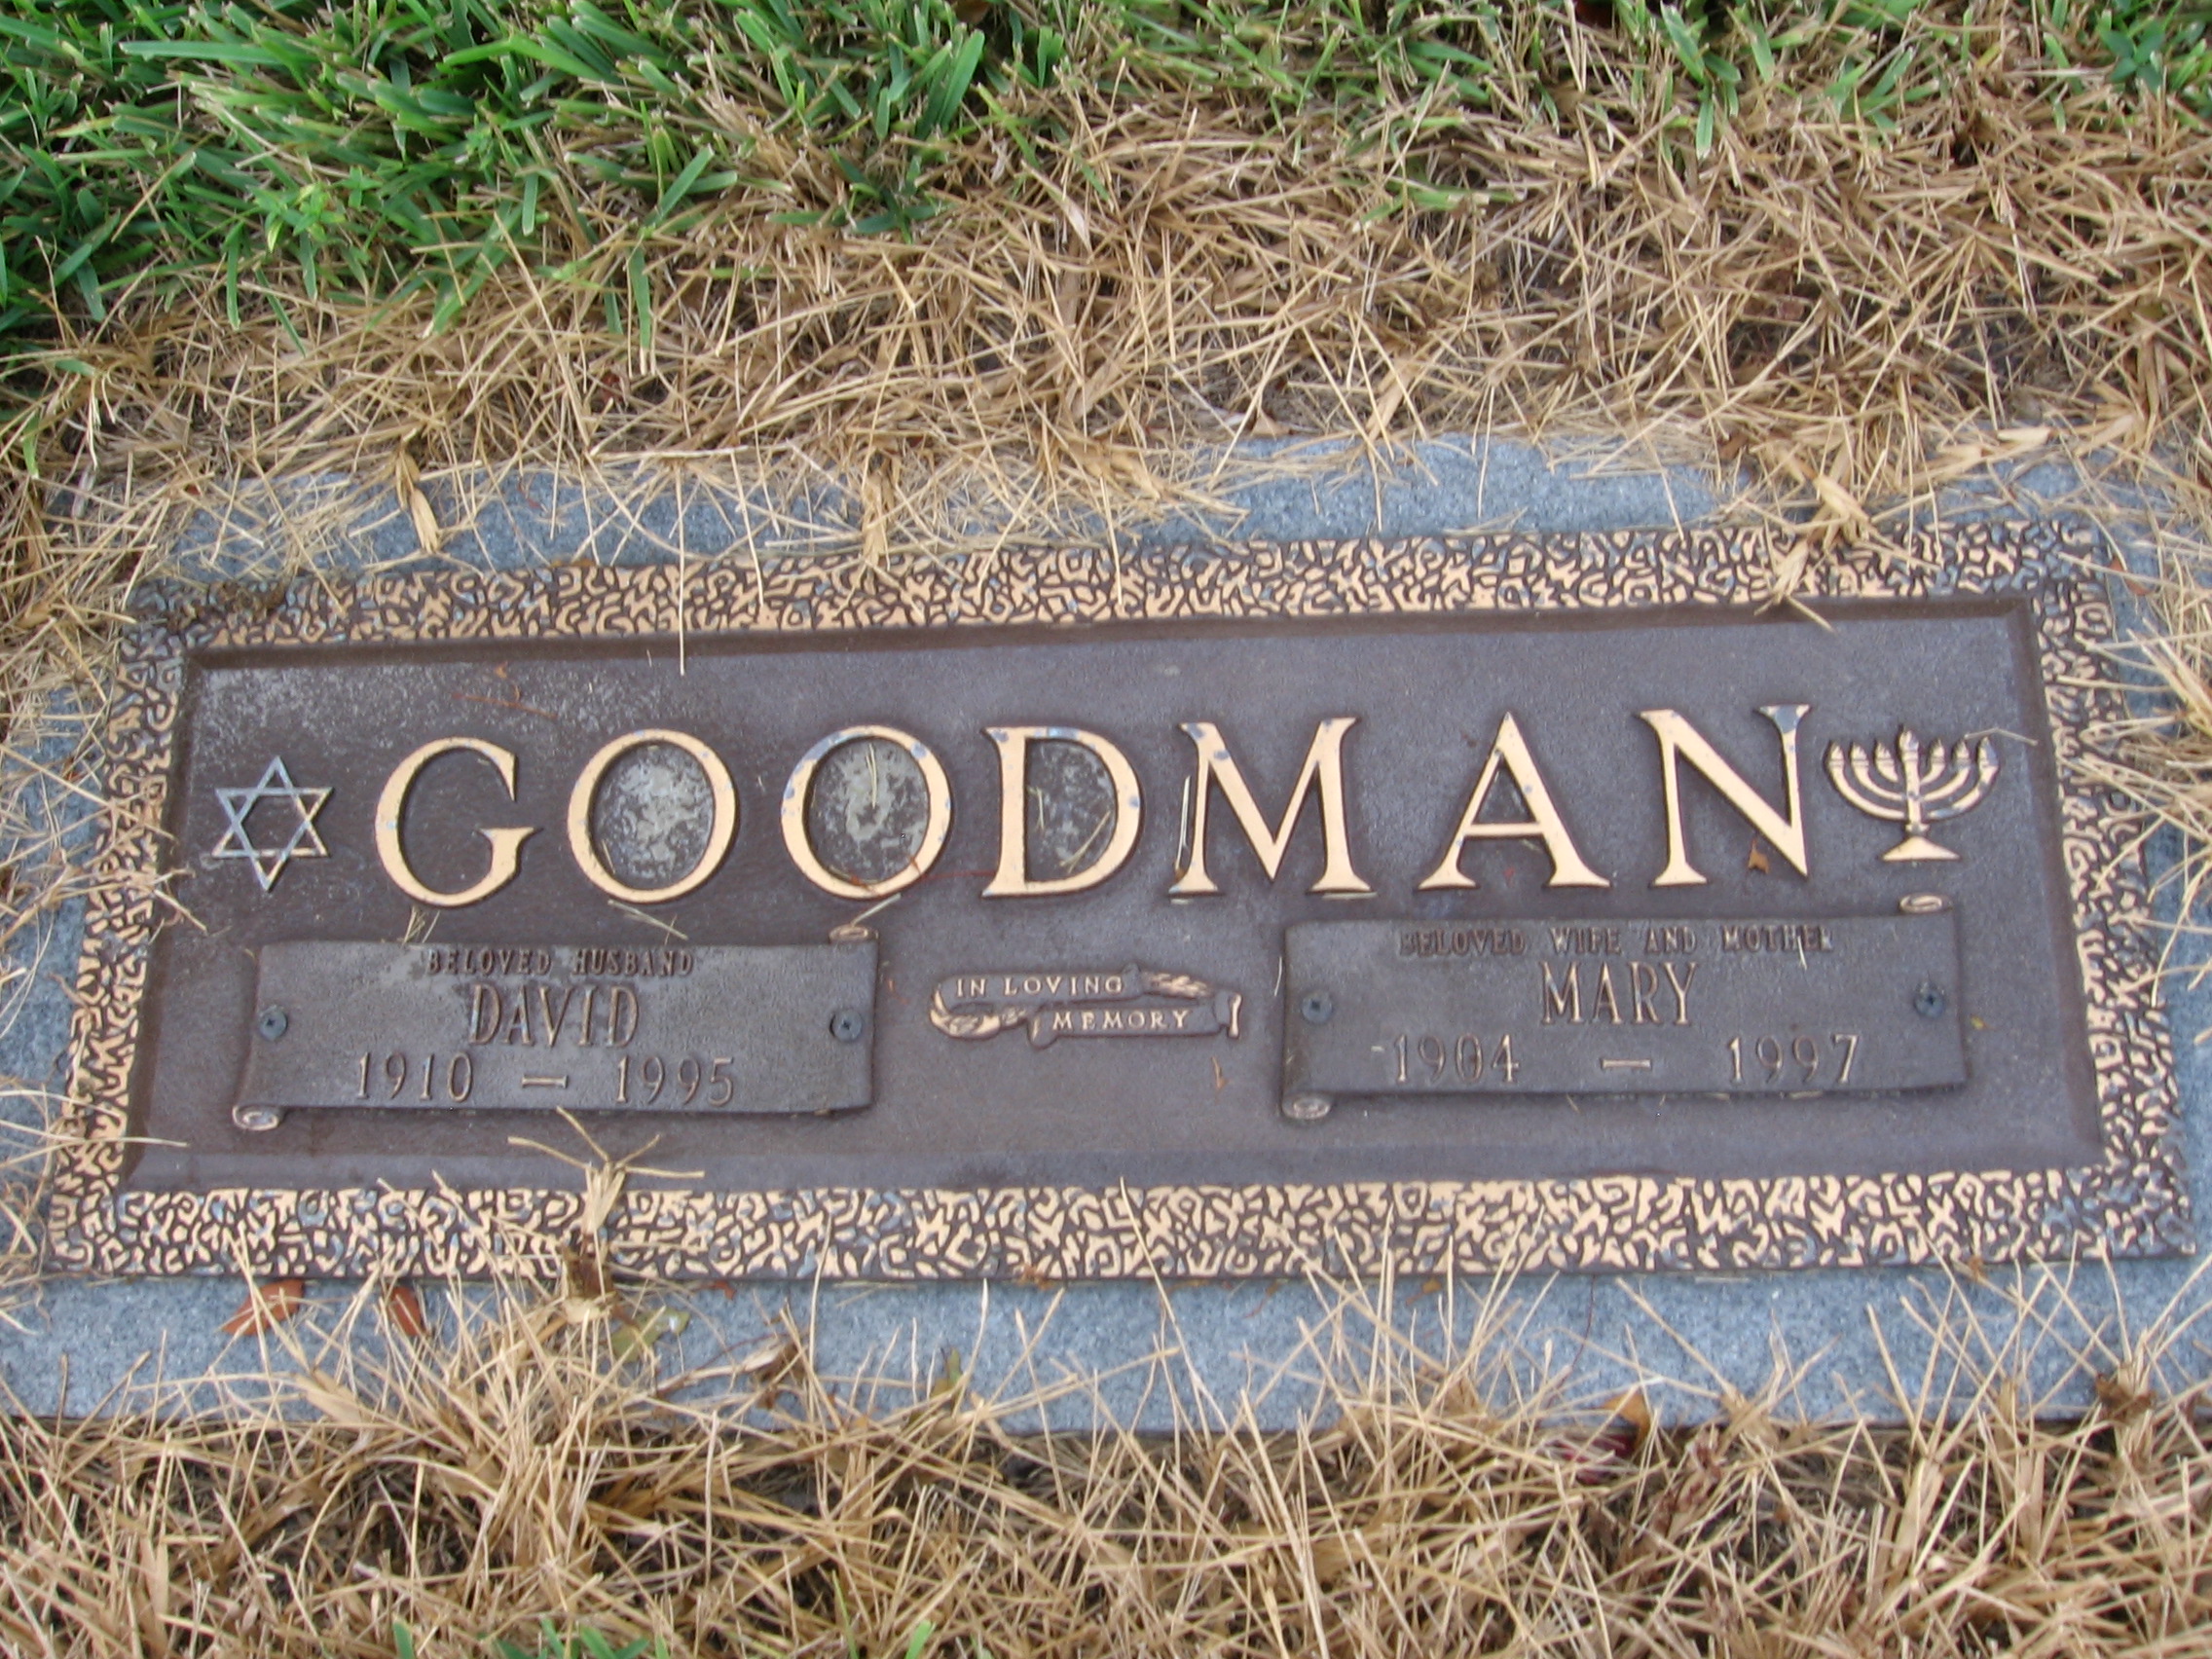 Mary Goodman